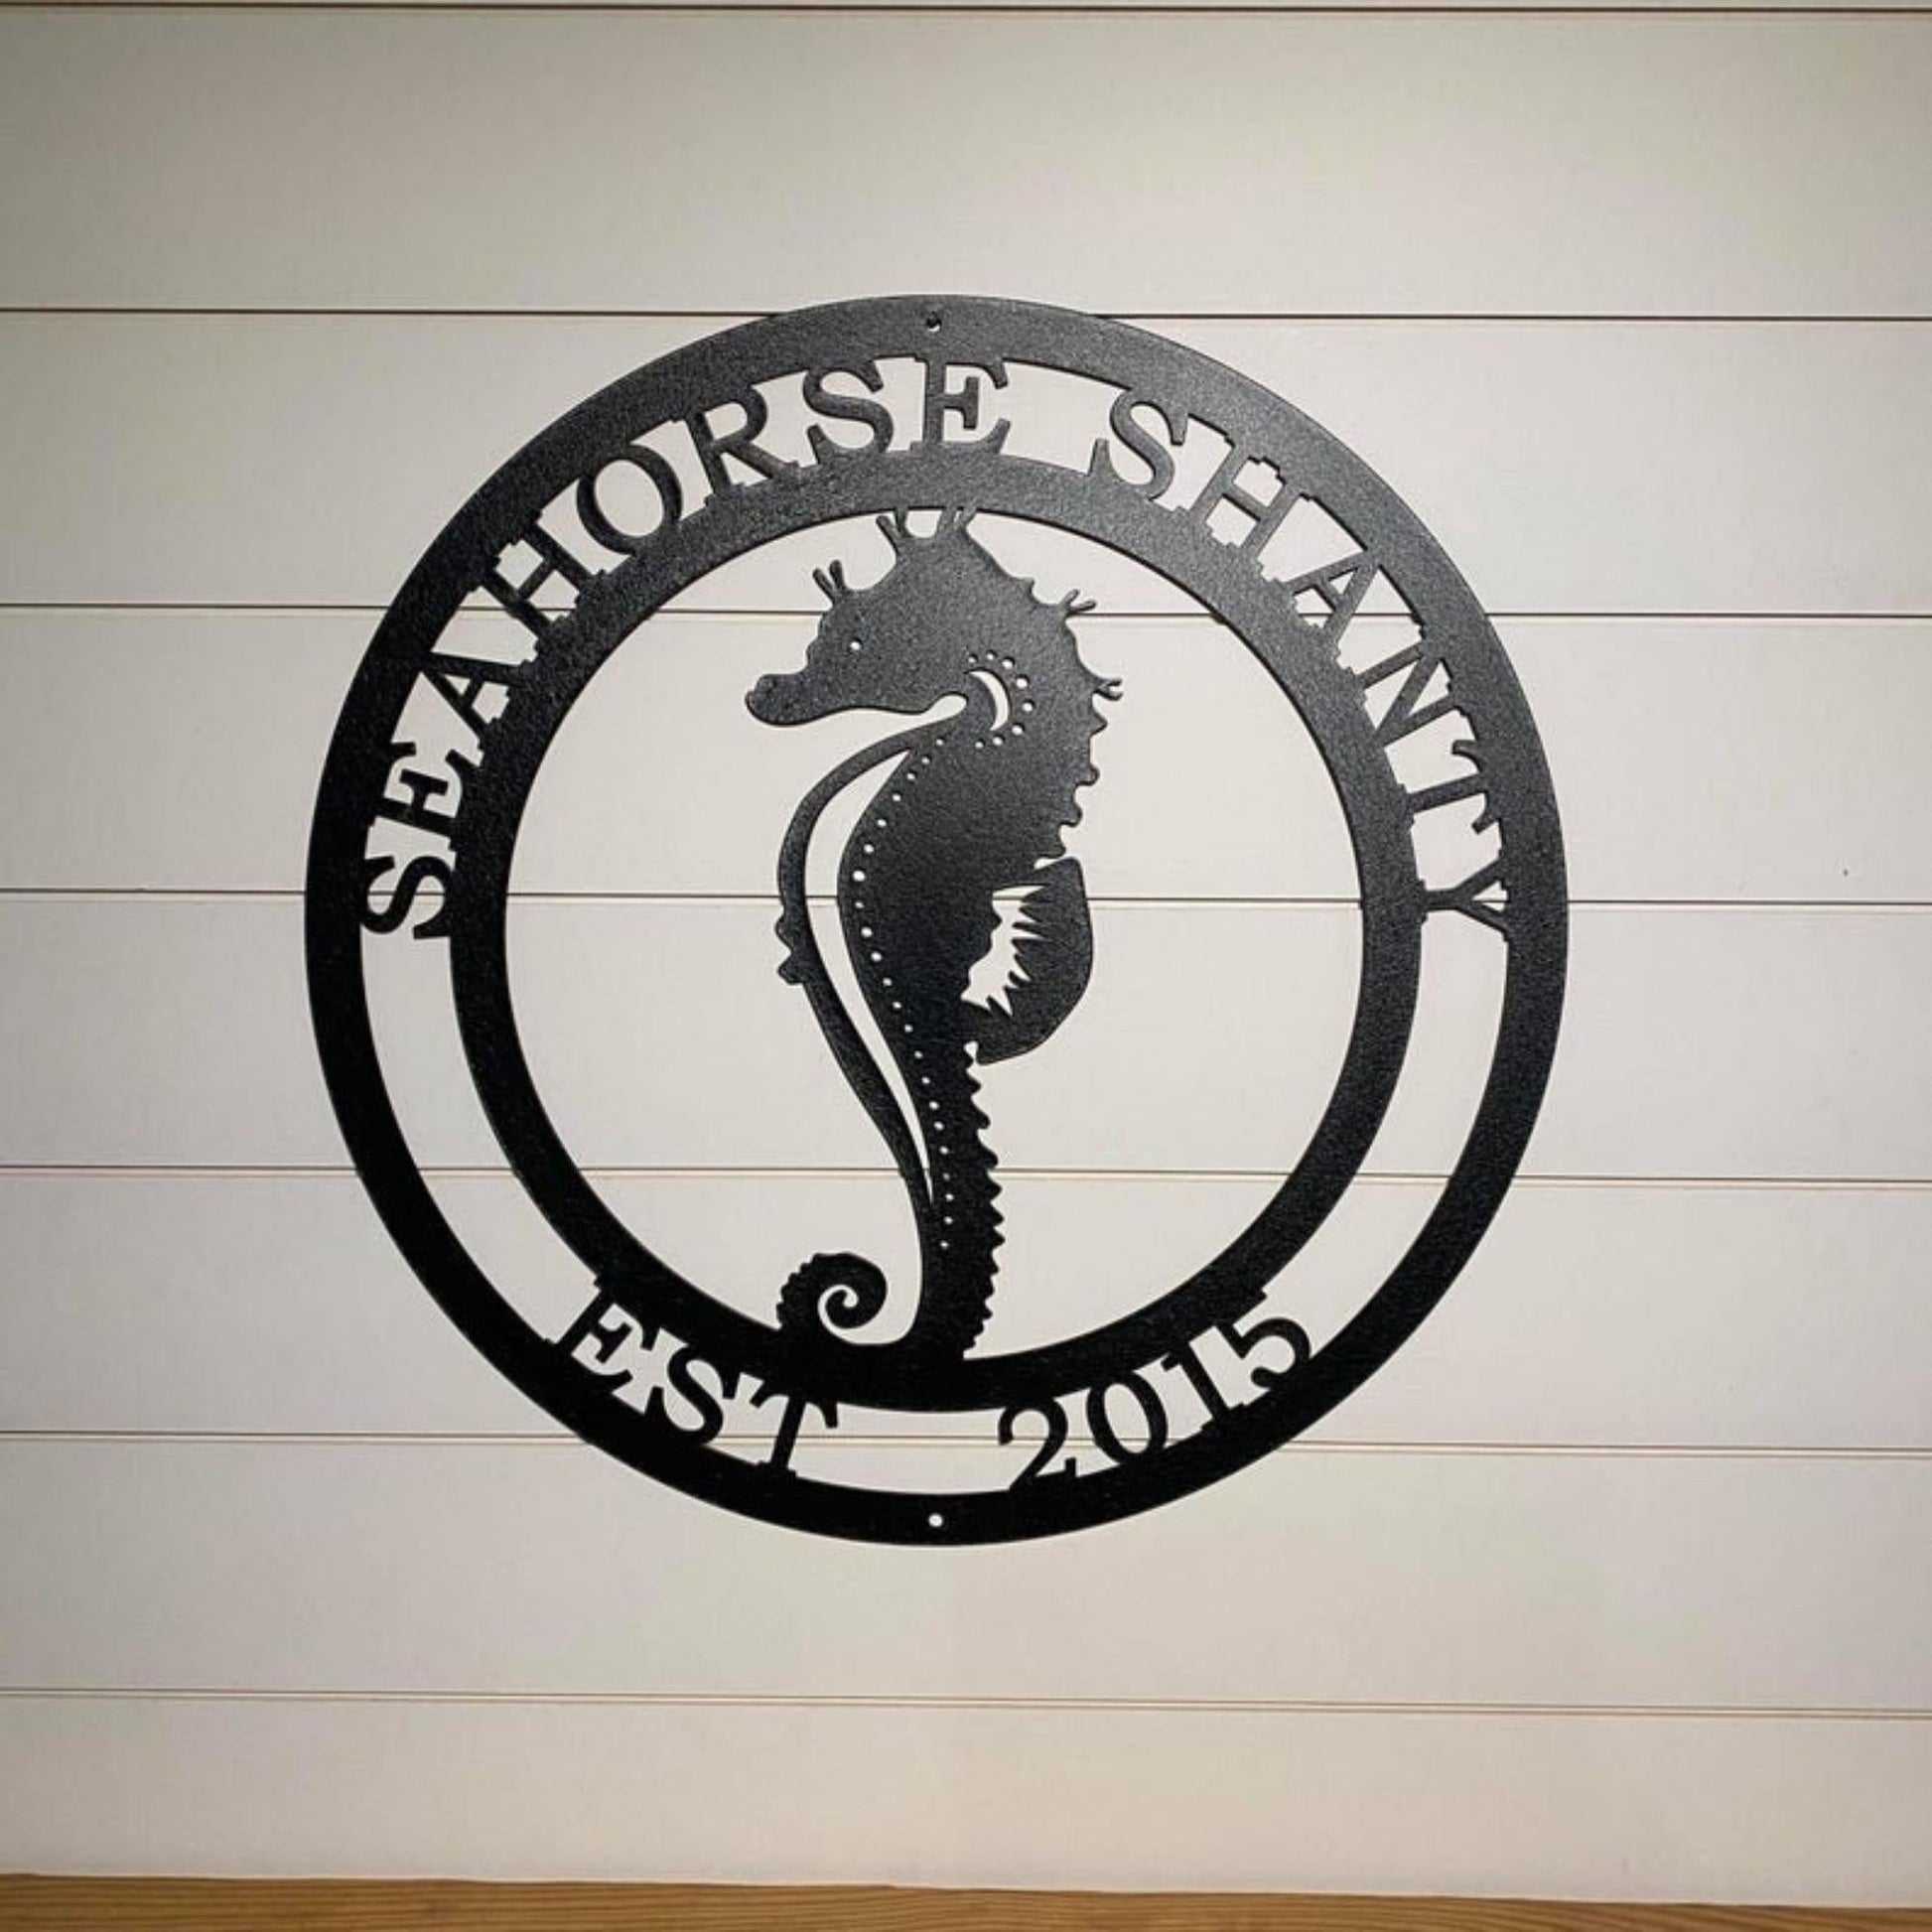 Personalized Seahorse Sign Nautical Decor House Sensations Art   